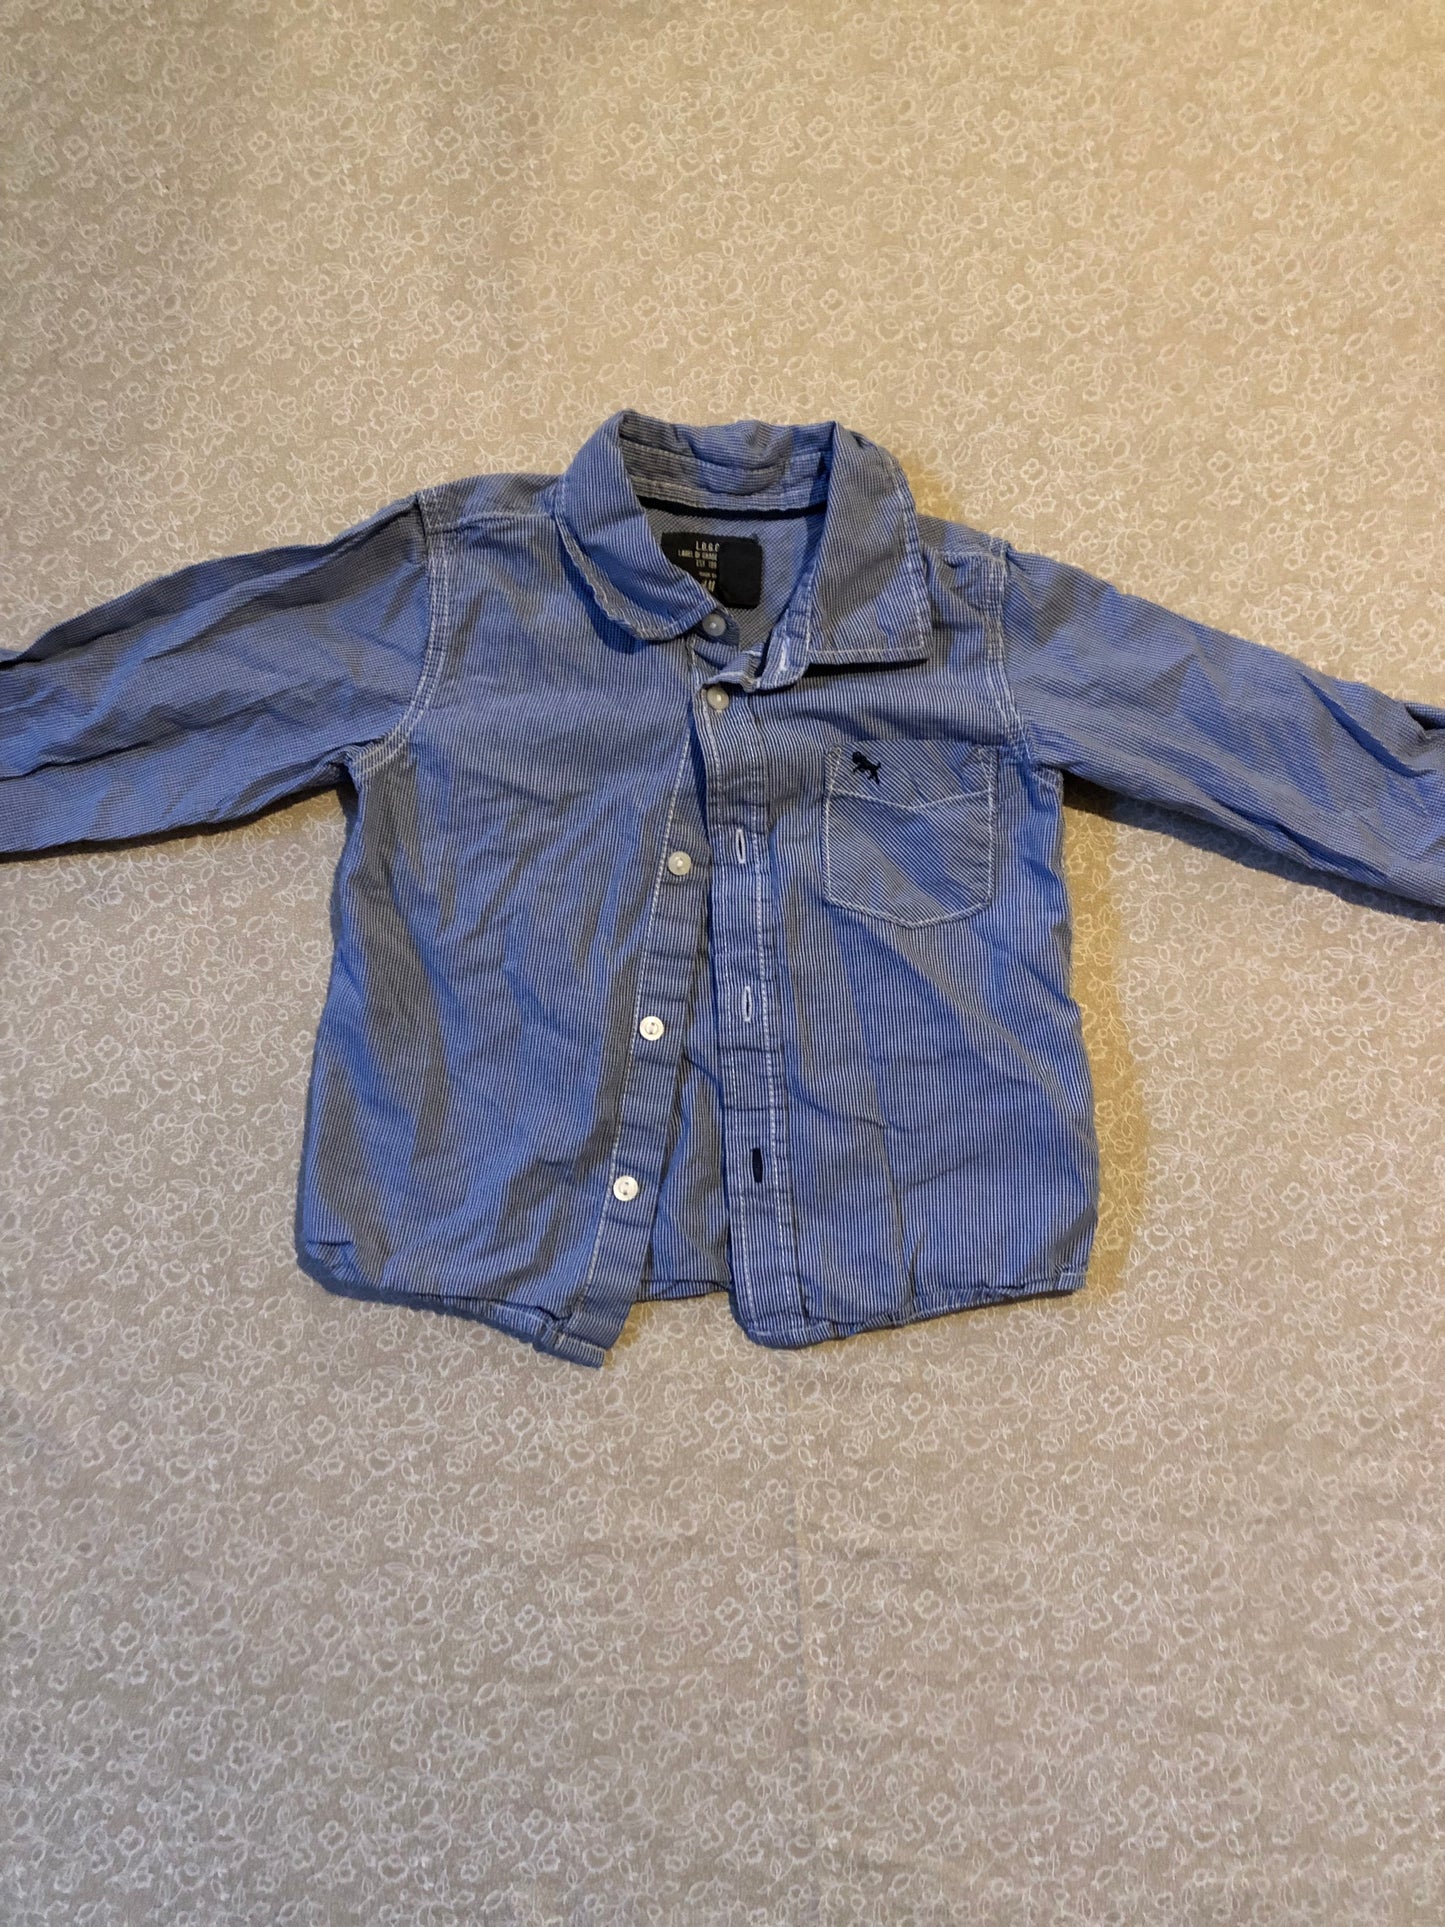 12-18-months-long-sleeve-shirt-hm-blue-white-plaid